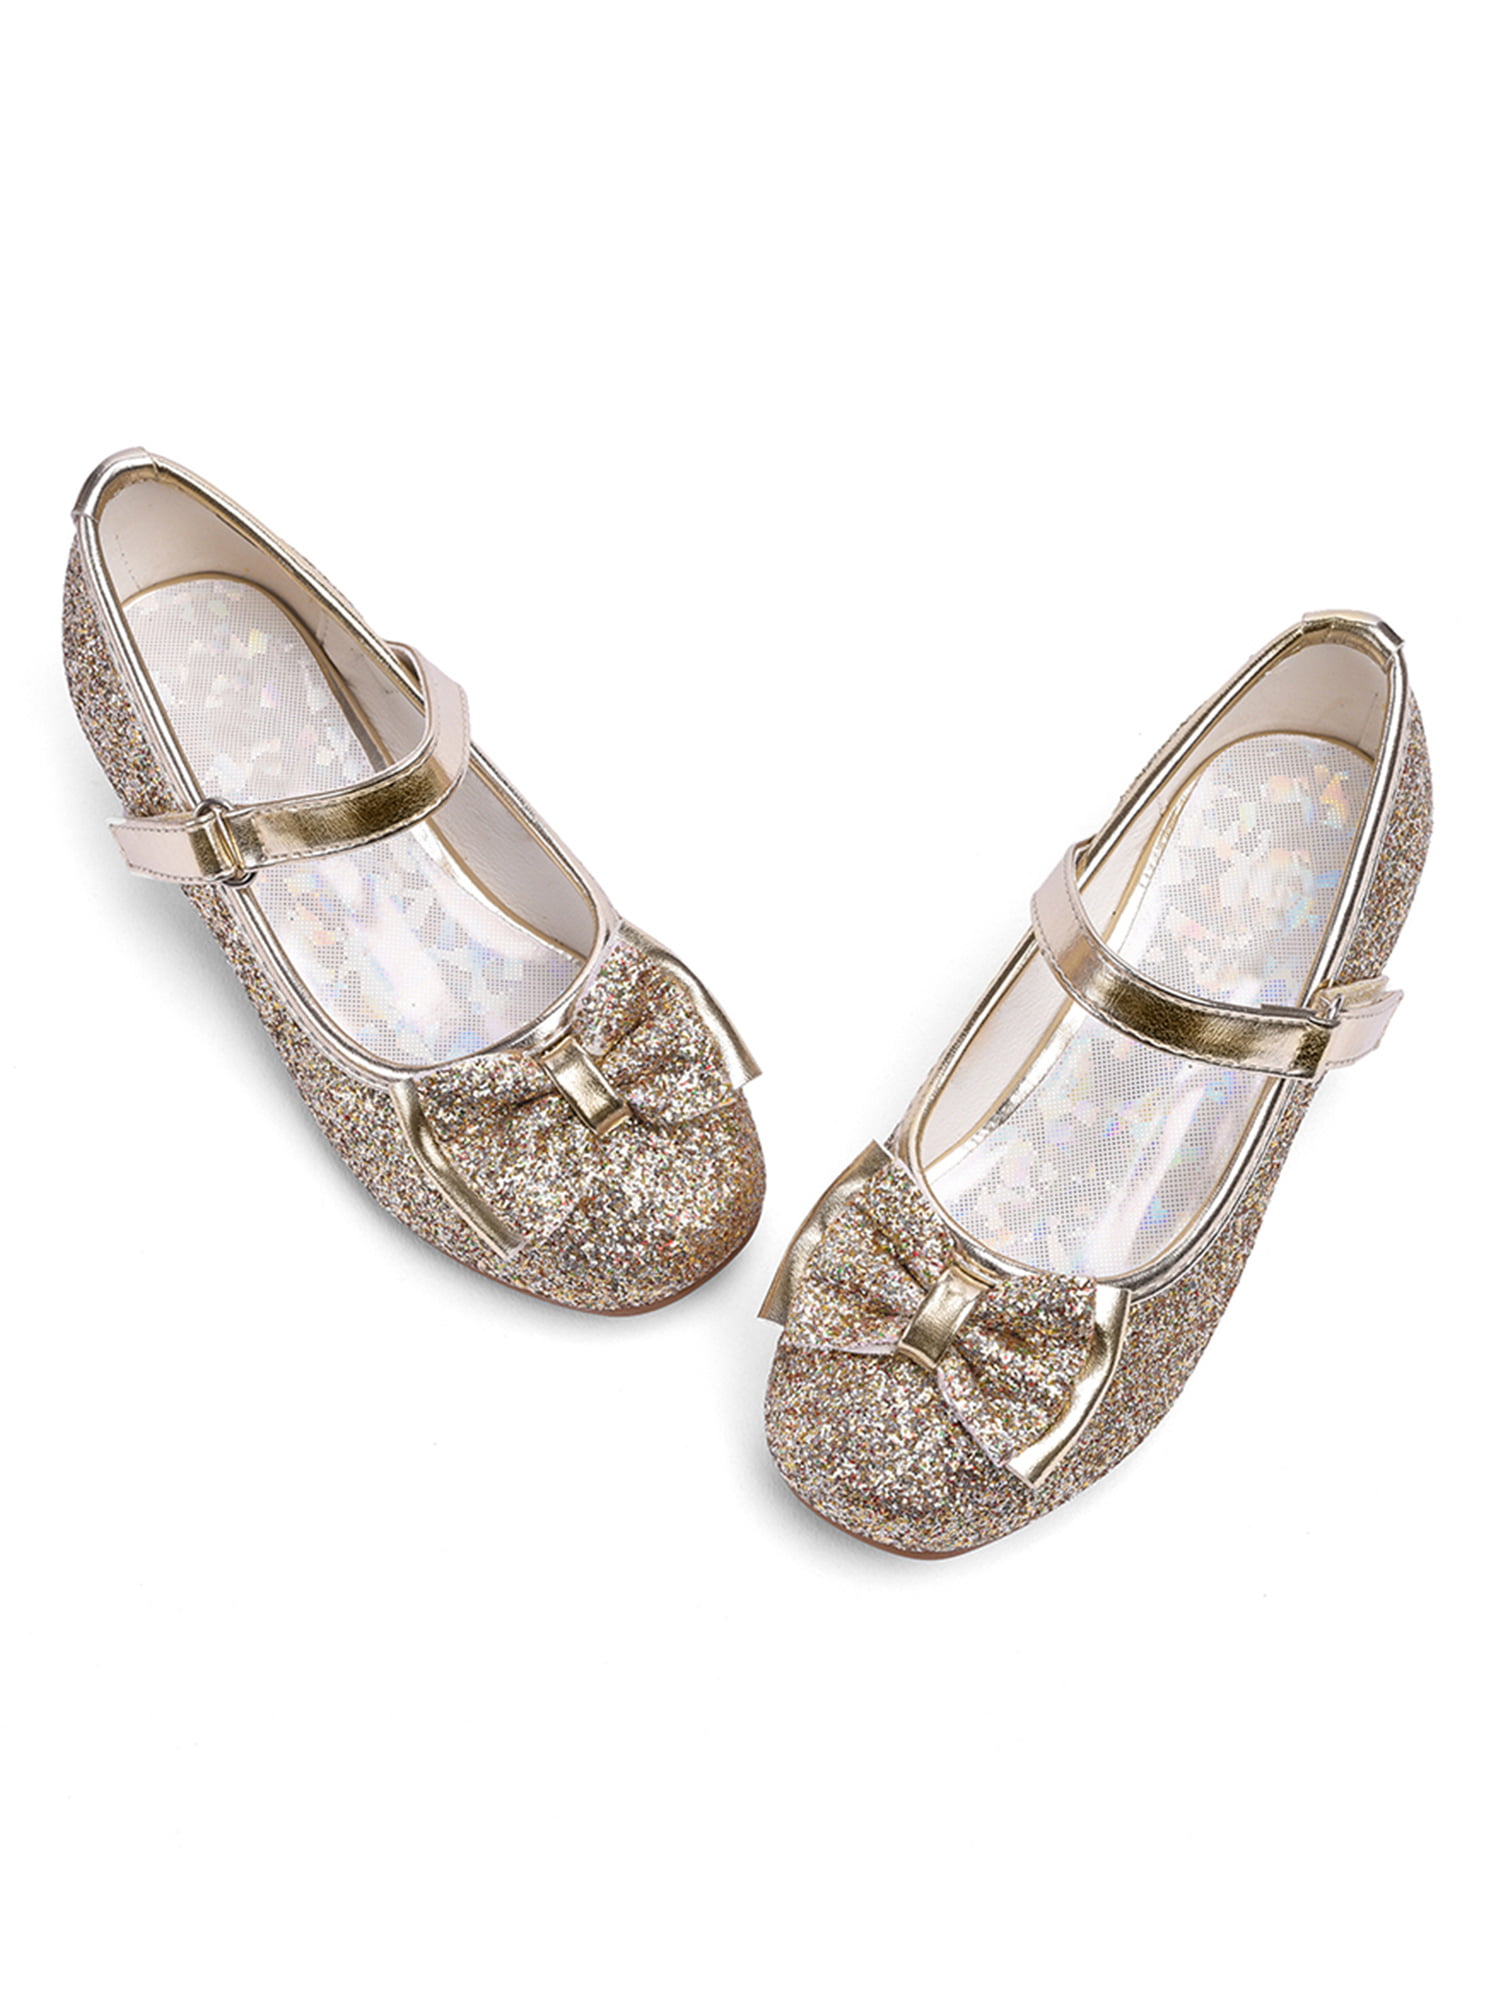 NWT OSHKOSH Girl Size 6 10 Gray Silver Glitter Dress Shoes Mary Janes NEW 